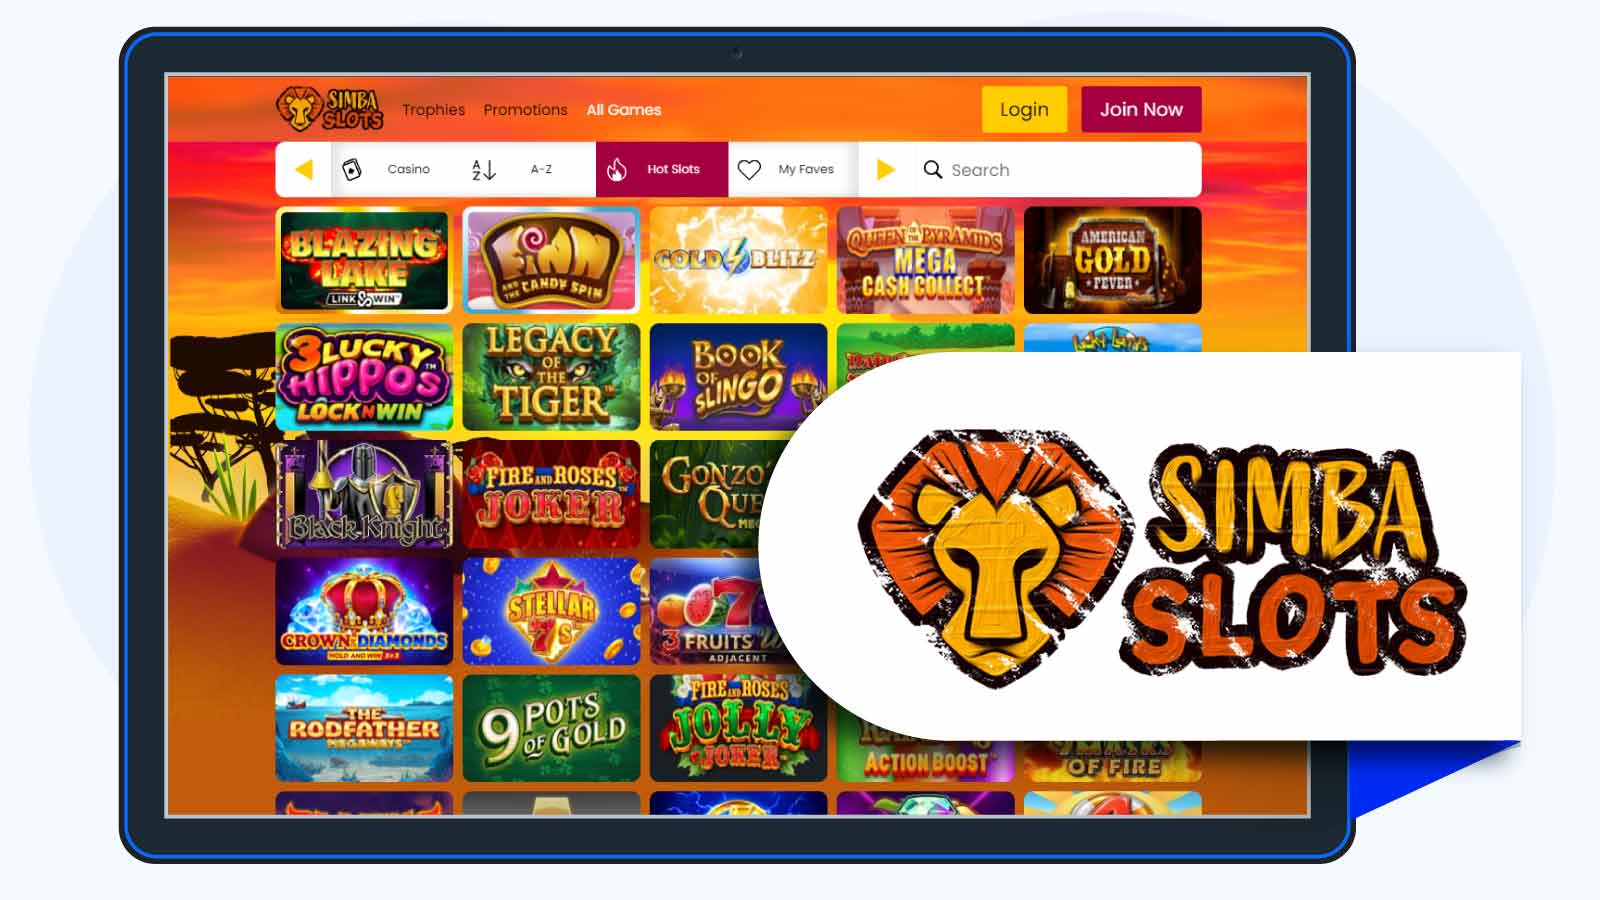 Simba Slots Playtech No Deposit Bonus Casino for UK Players